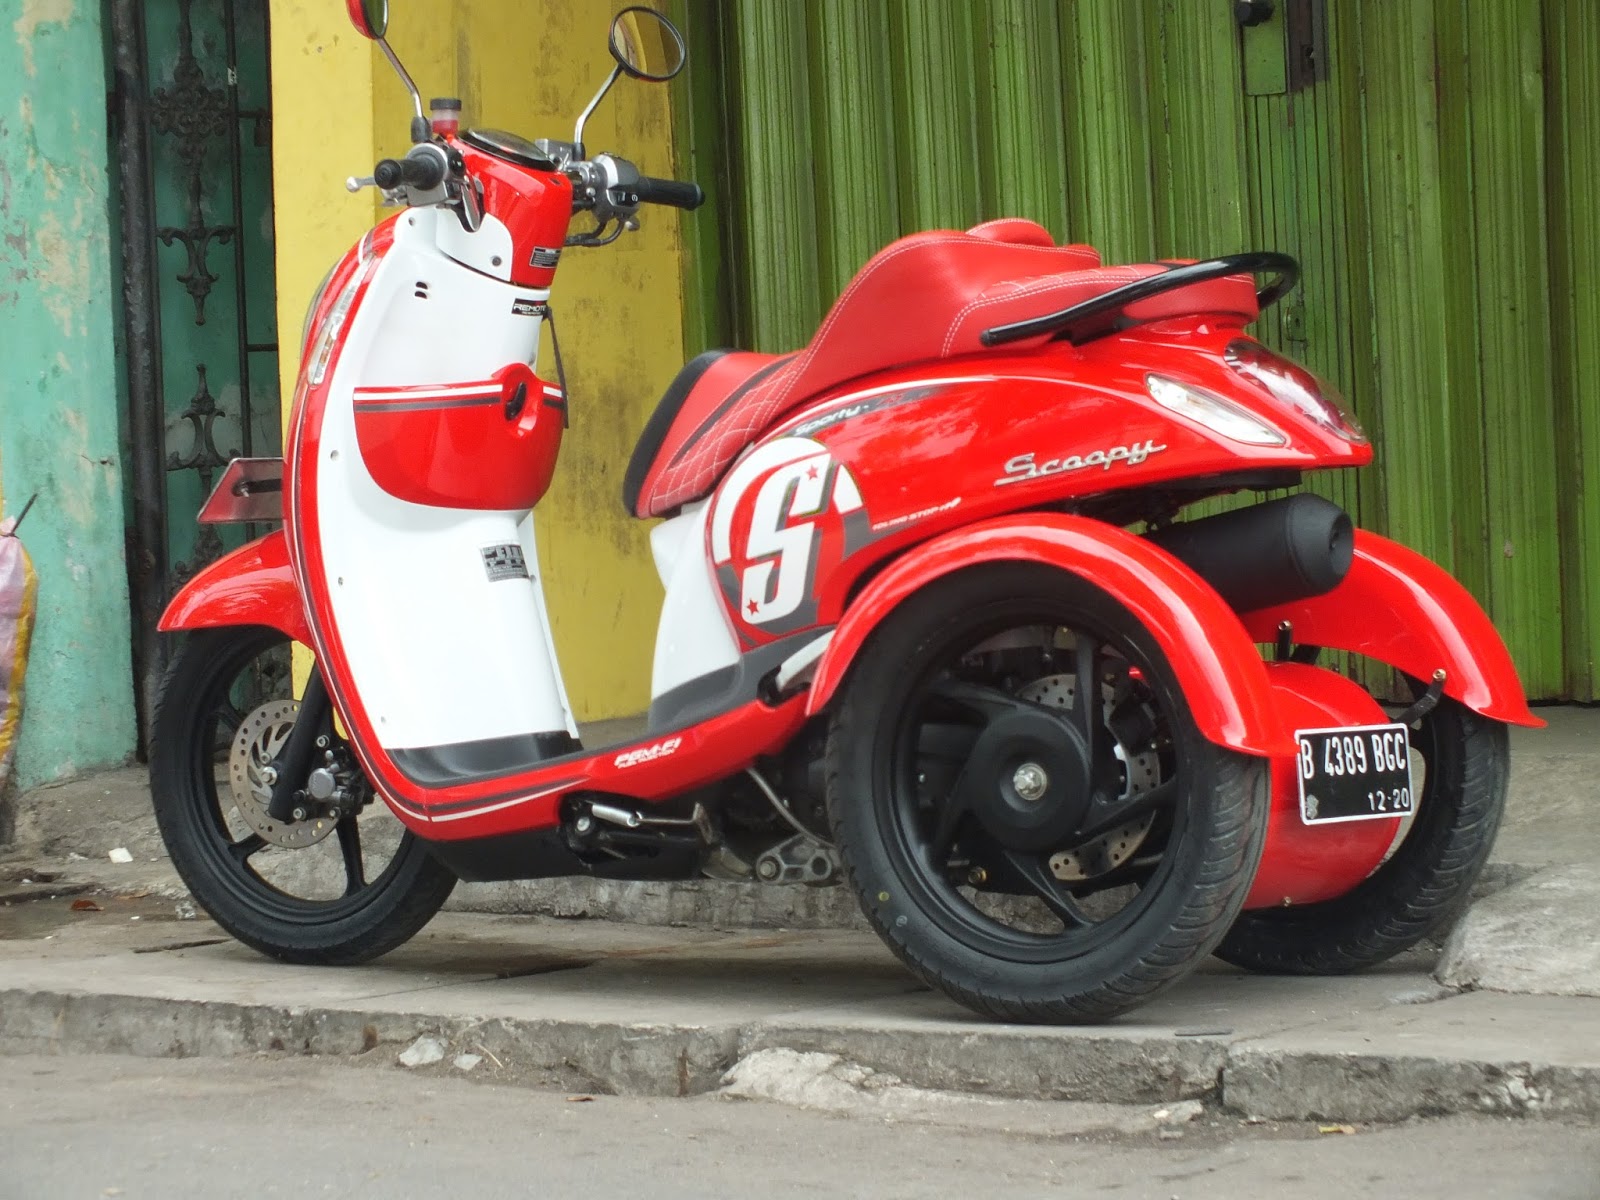 Kumpulan Modifikasi Motor Scoopy Bali Wwwmotormodifikasixyz